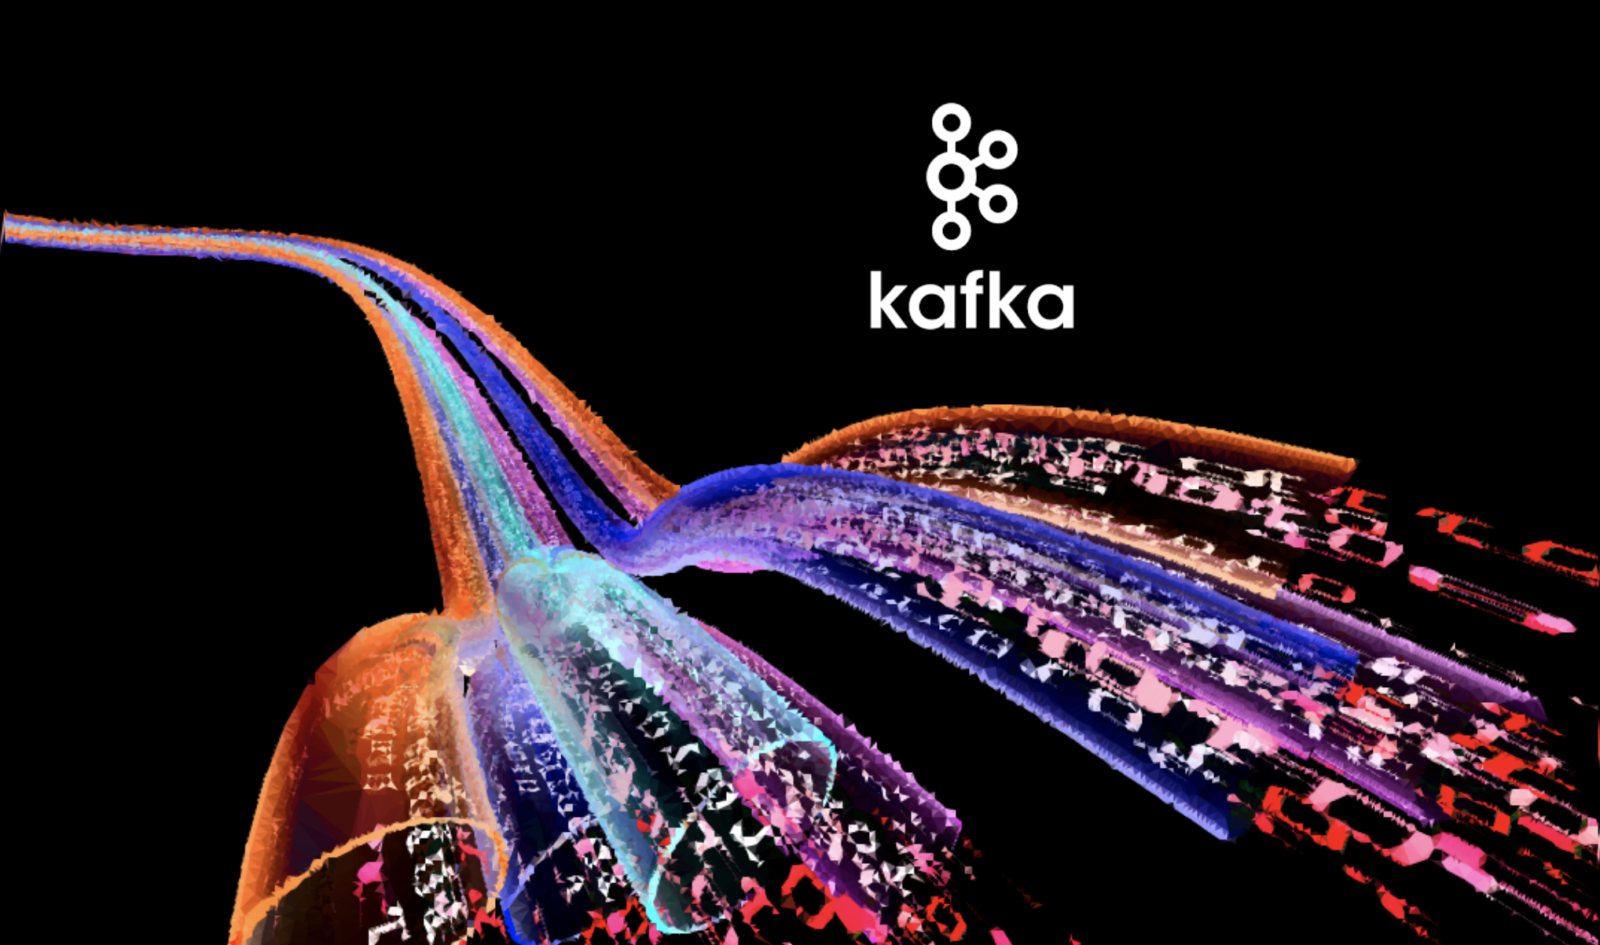 Kafka stream feature image